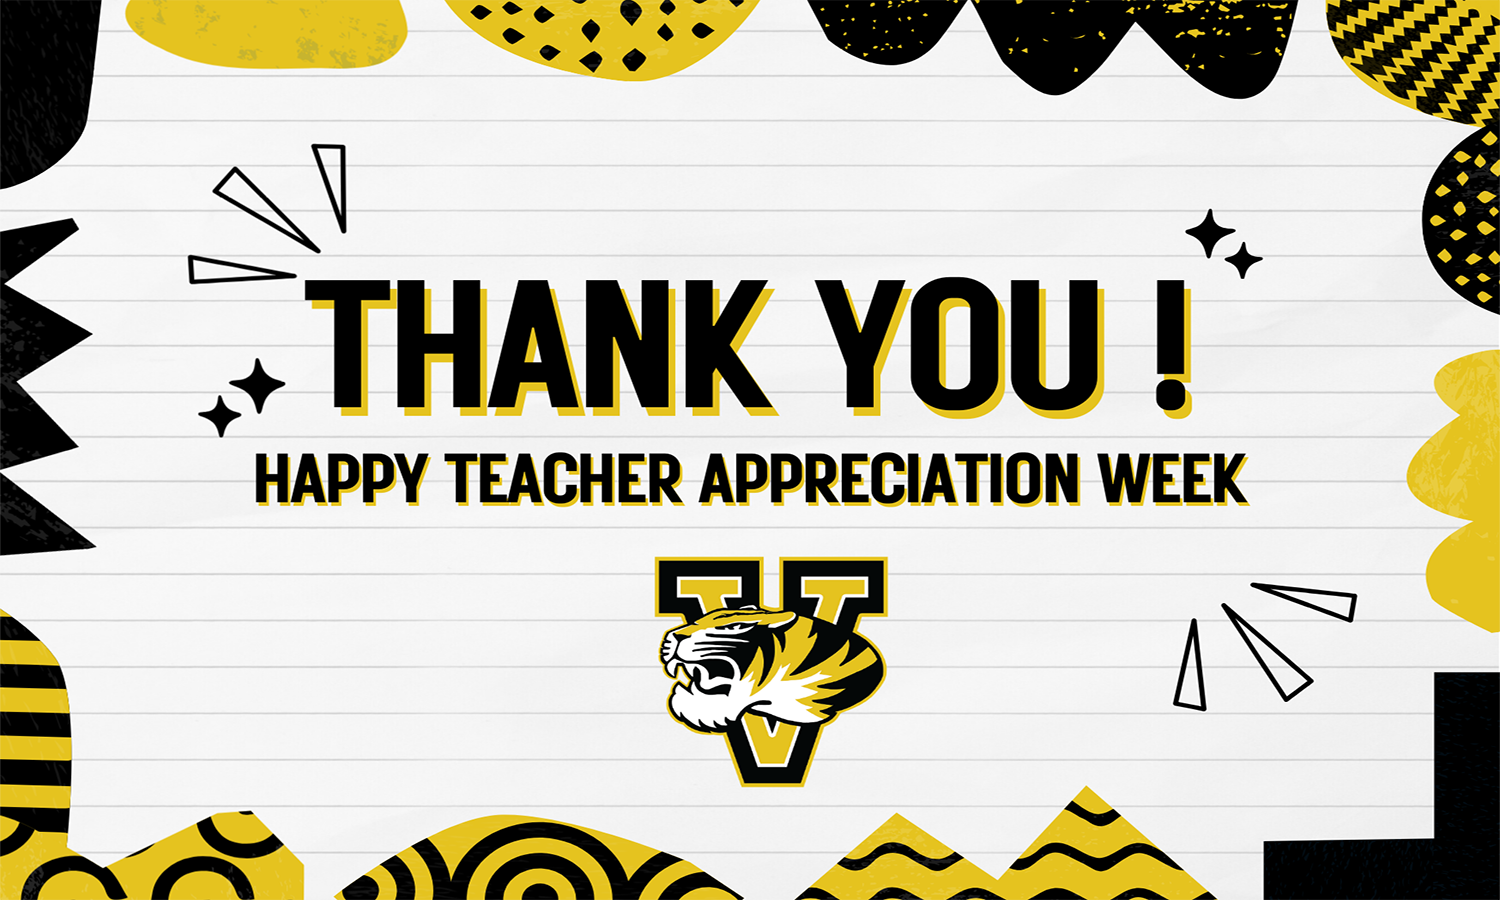 THANK YOU - Happy Teacher Appreciation Week